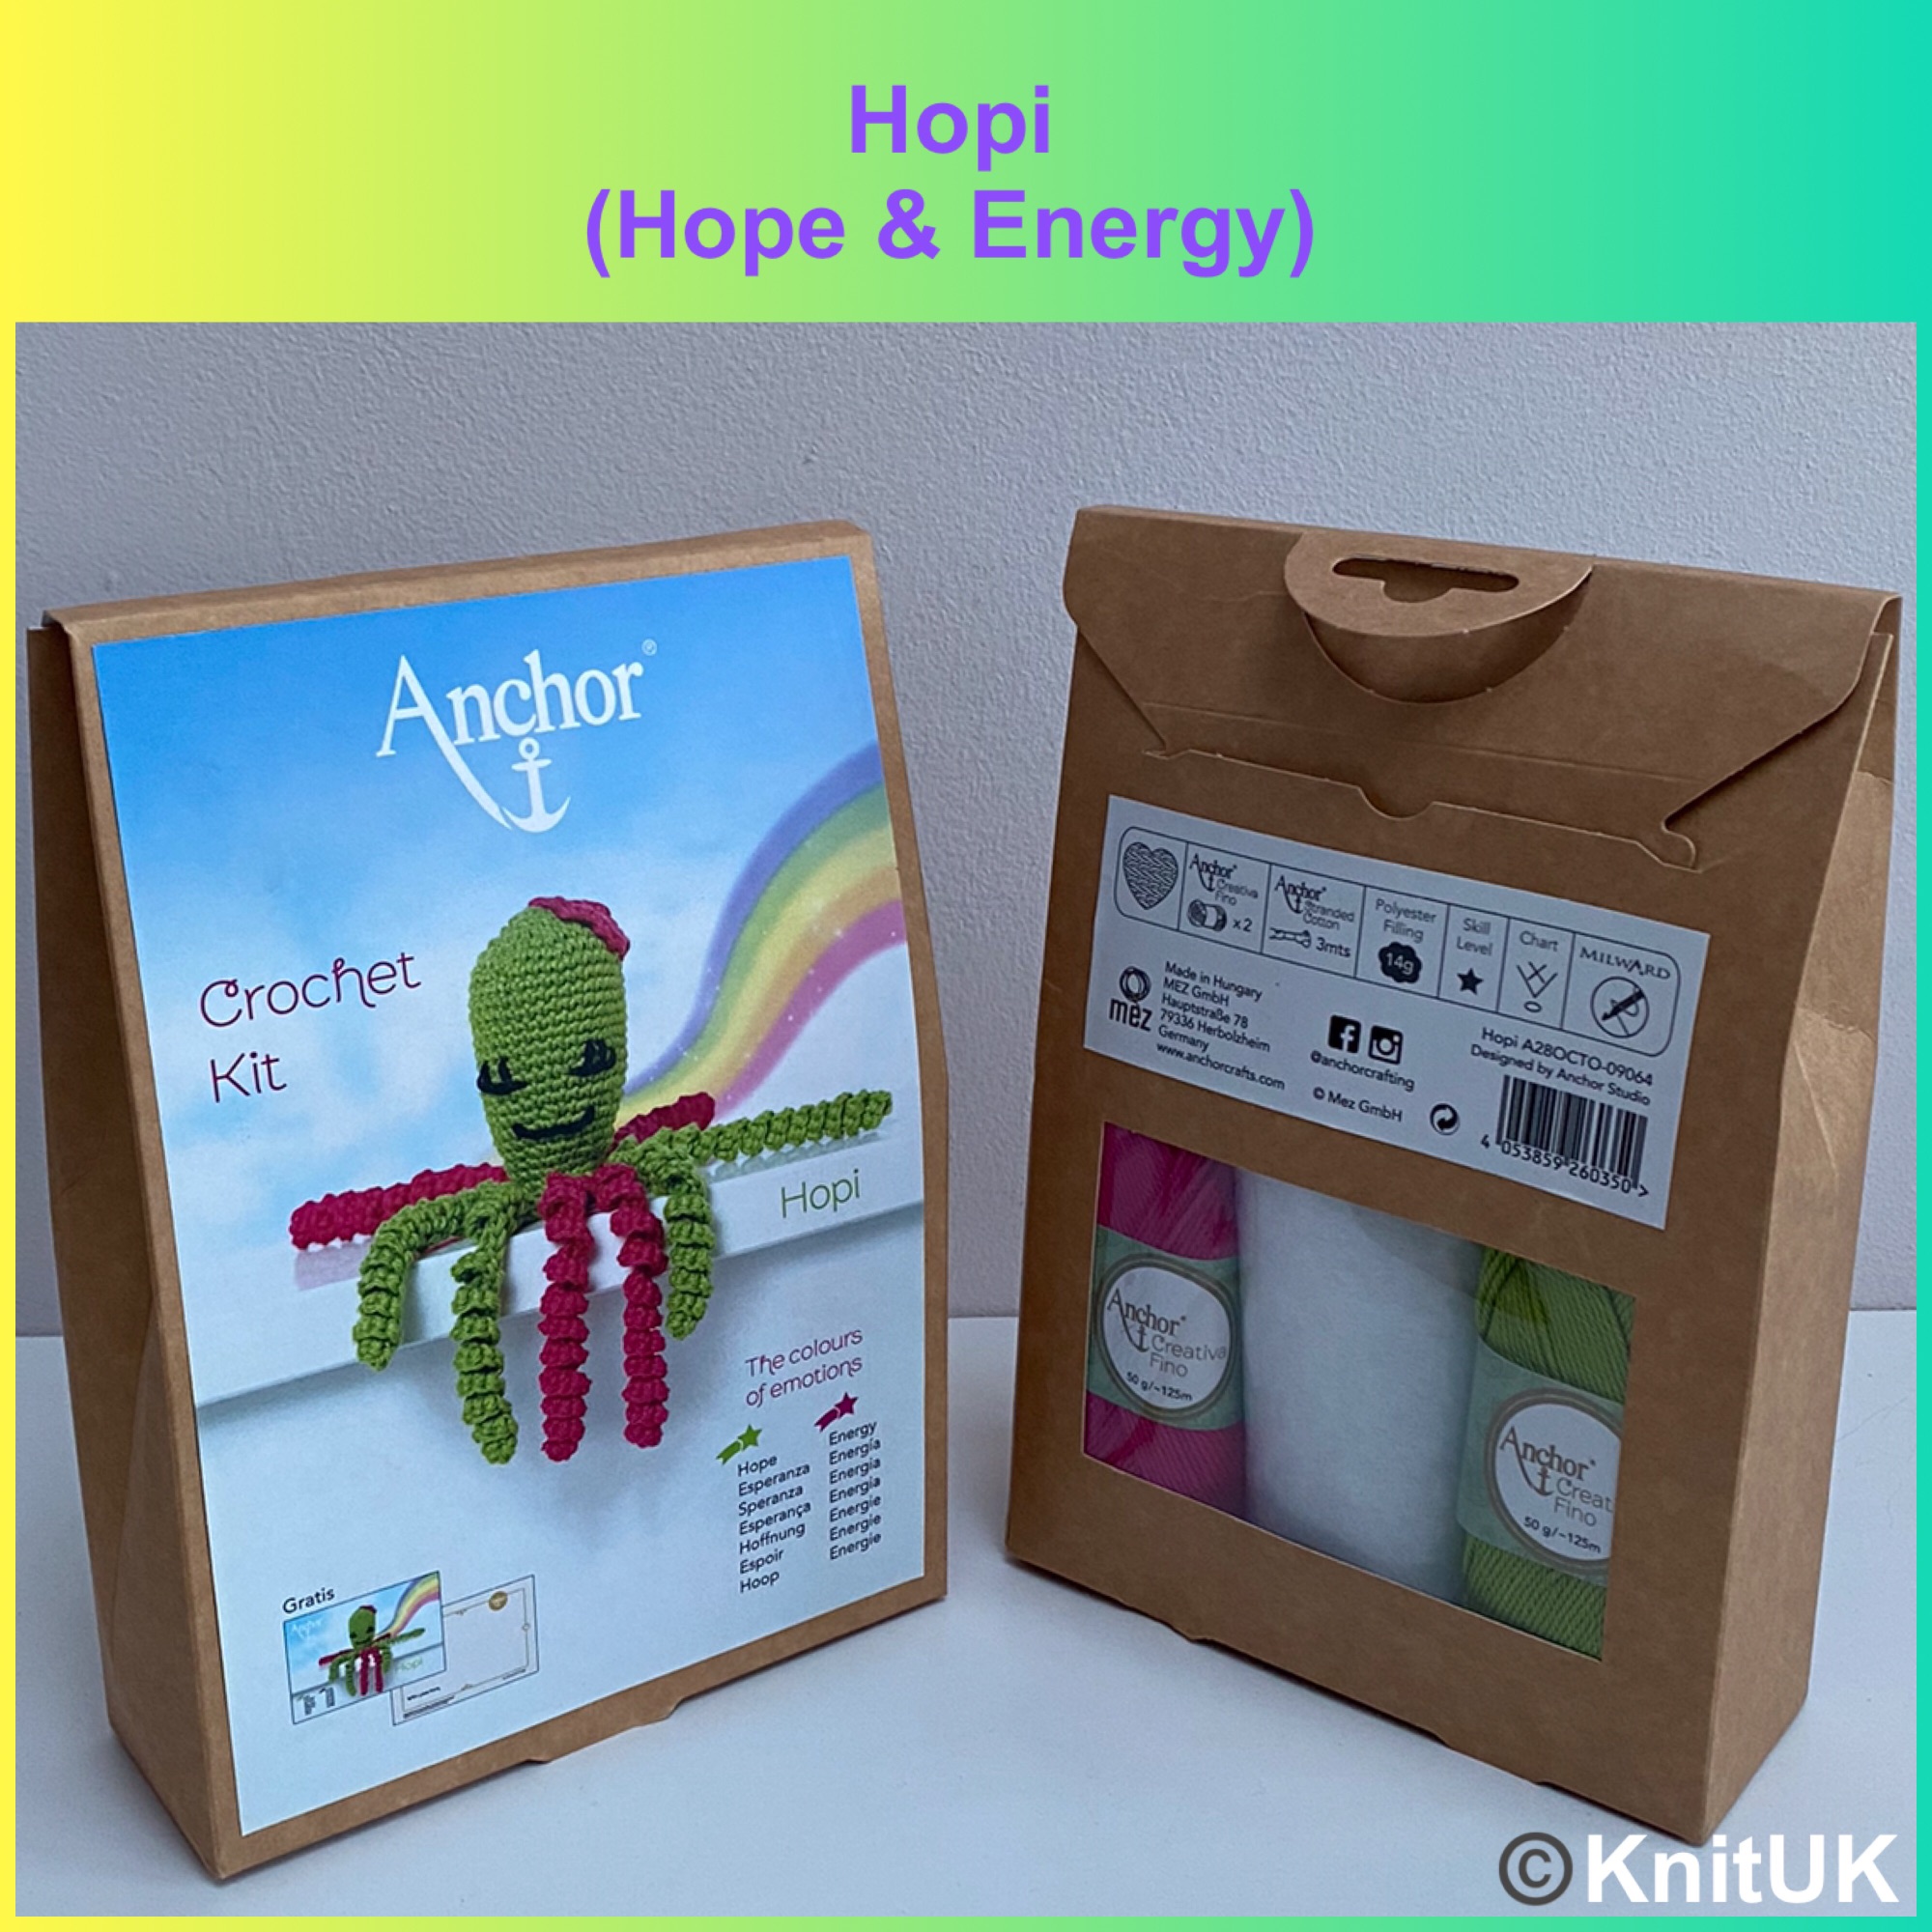 Anchor octopus crochet kit Hopi the colours of emotions Hope energy